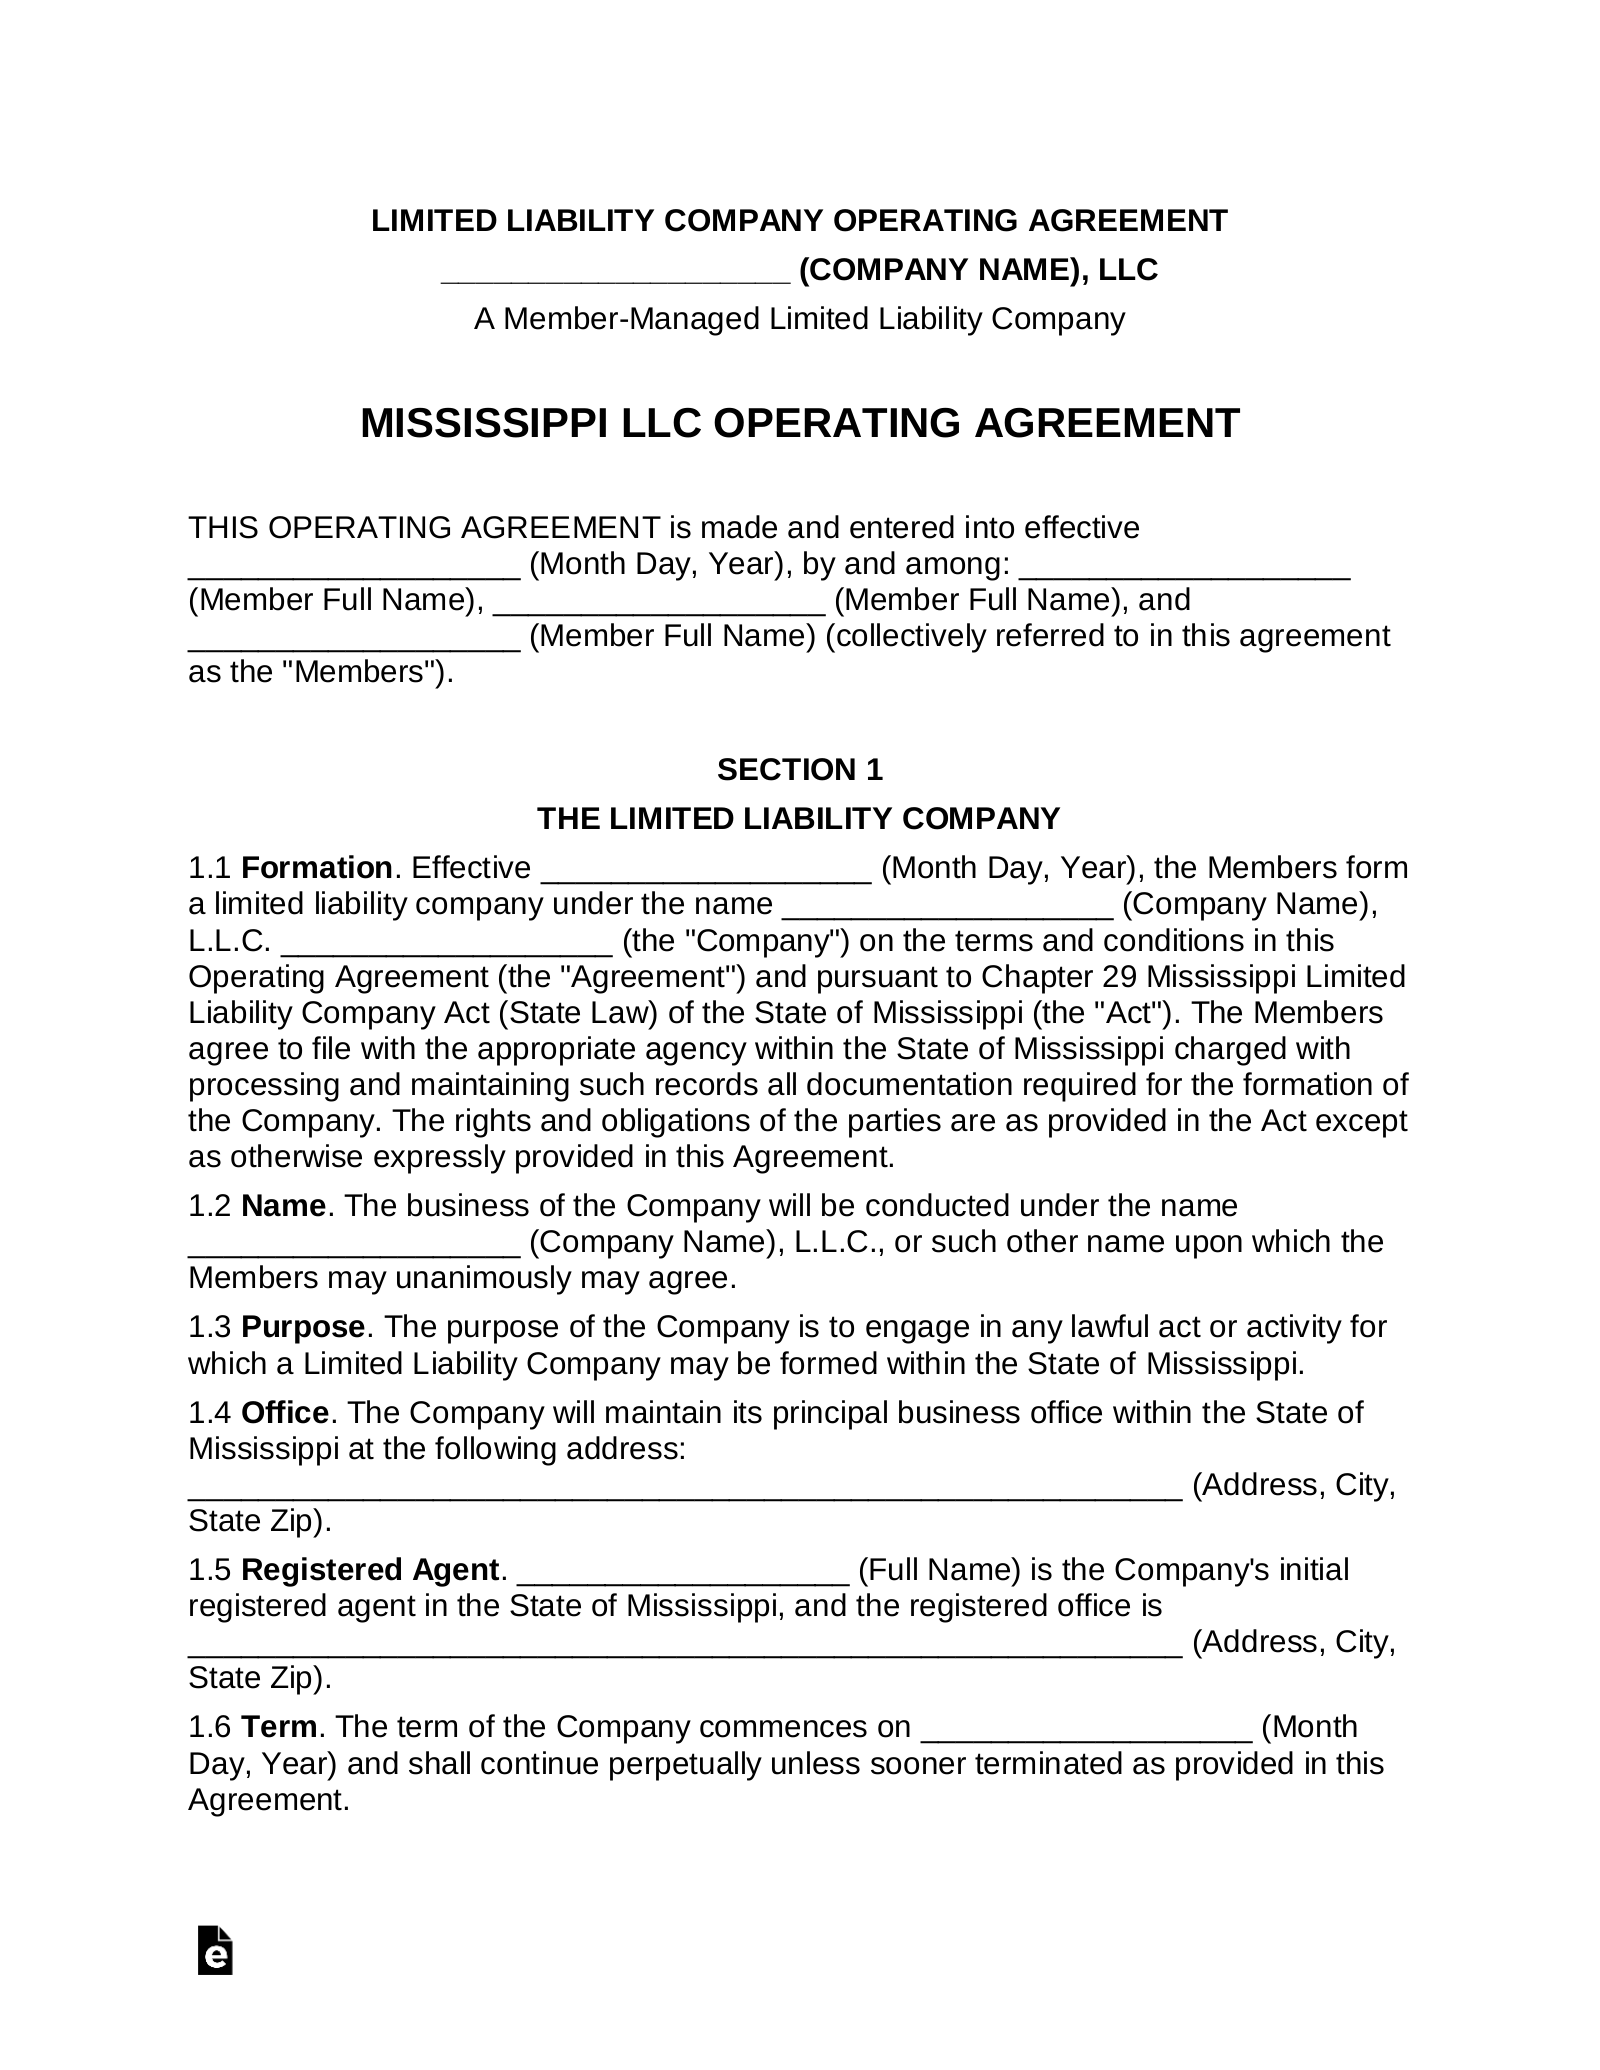 Mississippi Multi-Member LLC Operating Agreement Form